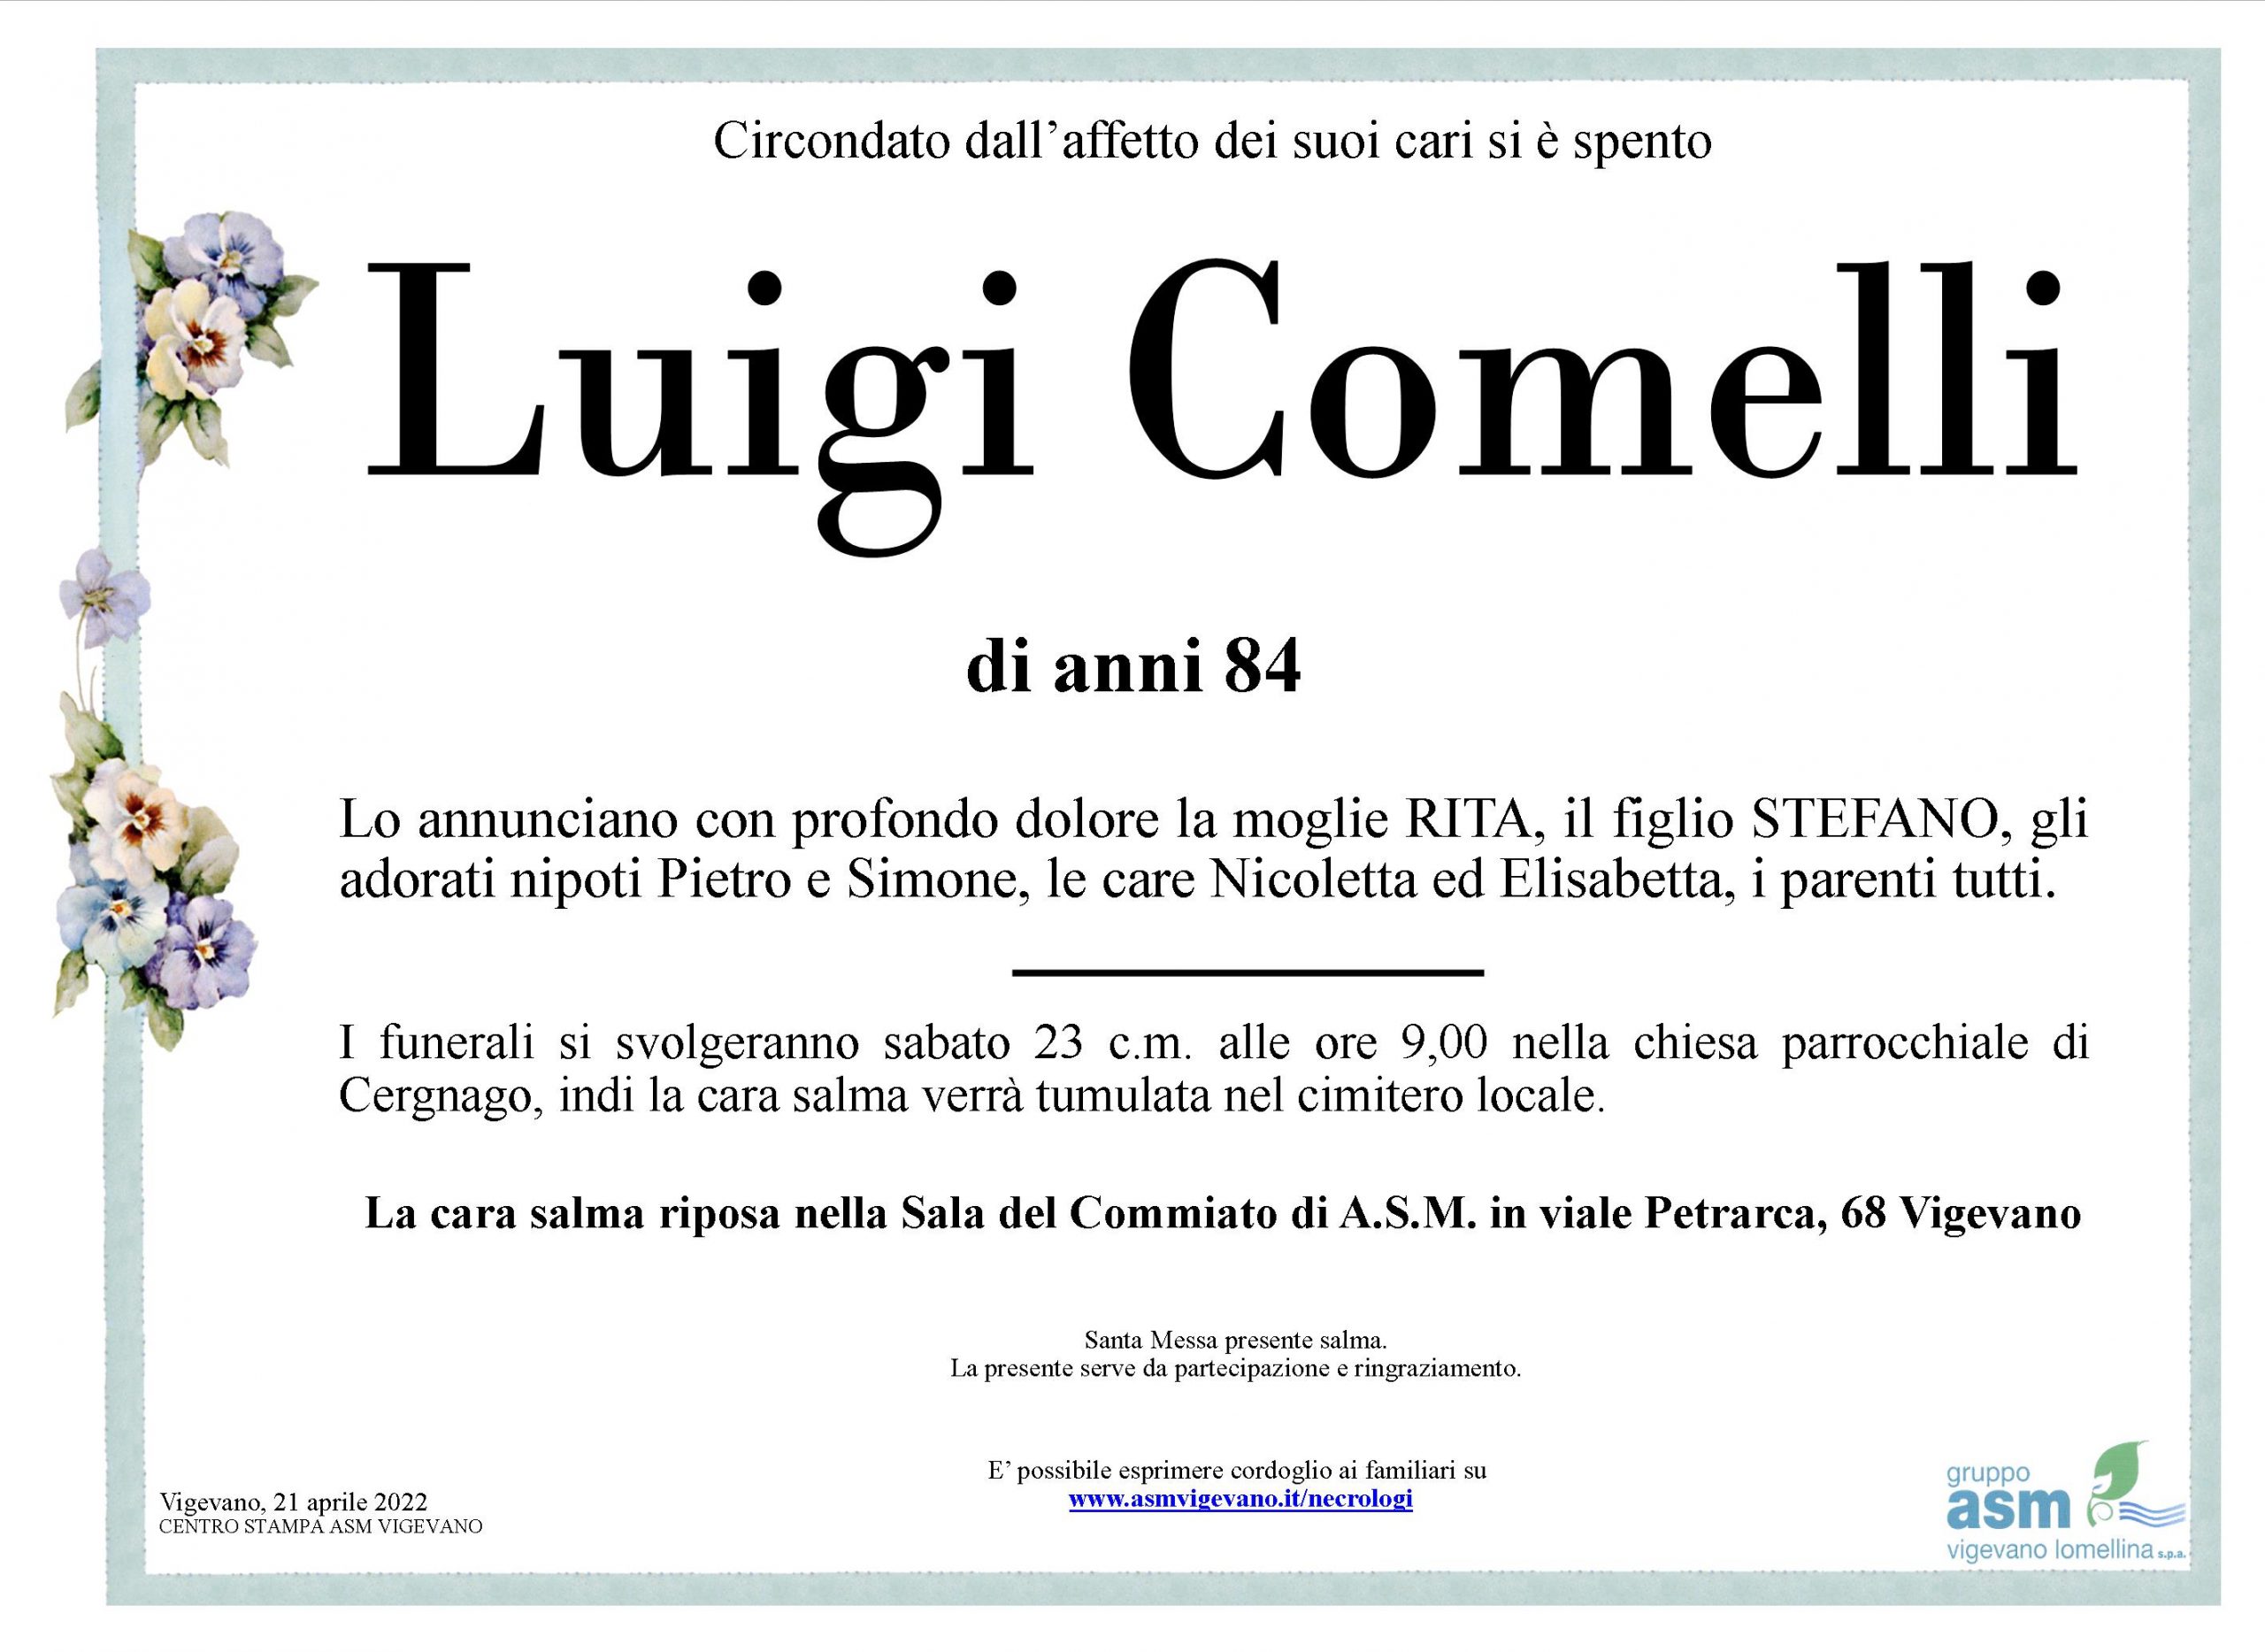 Luigi Comelli